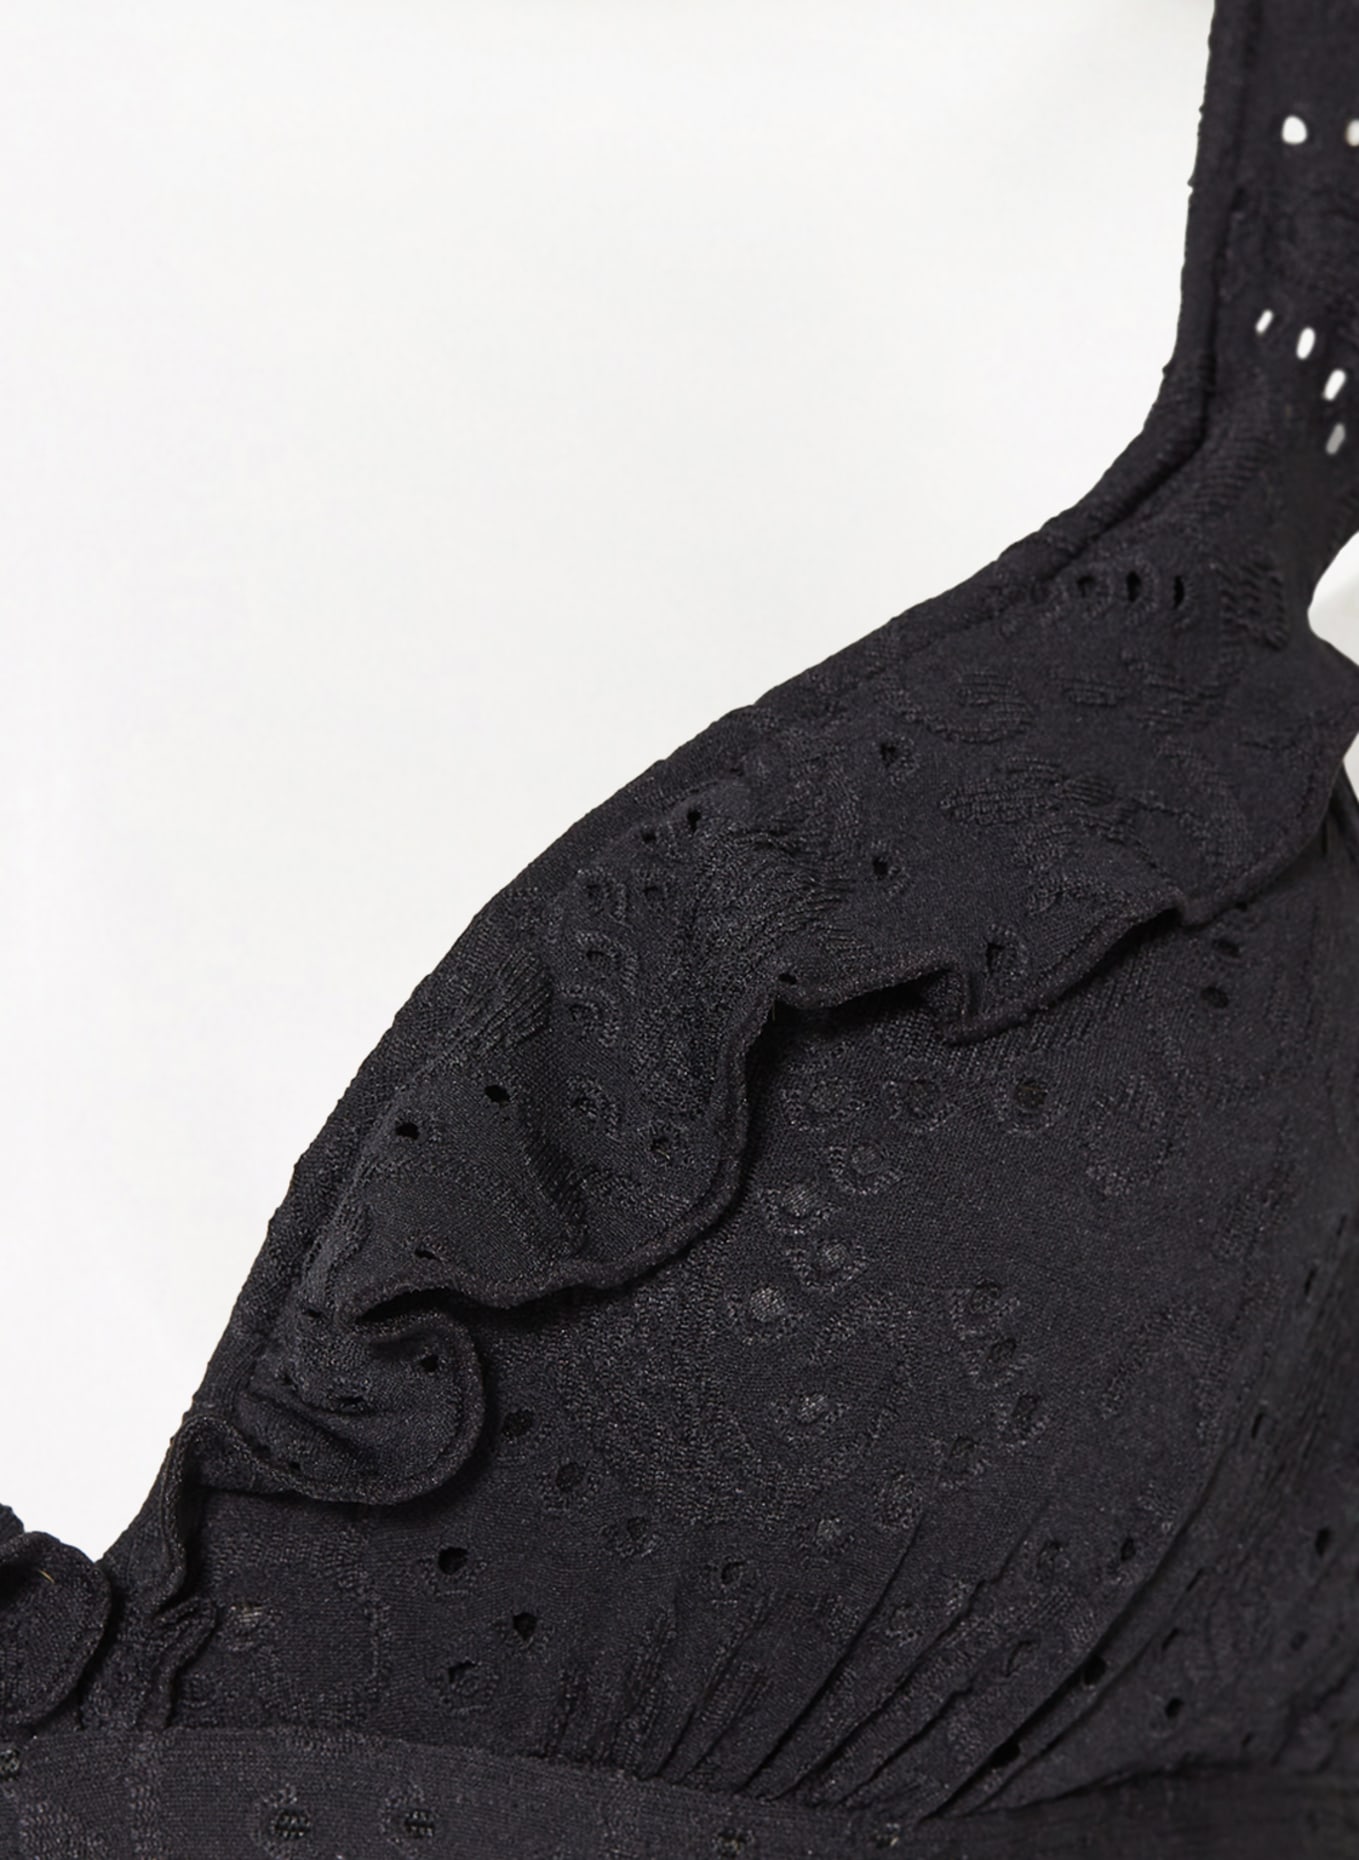 BEACHLIFE Underwired bikini top BLACK EMBROIDERY, Color: BLACK (Image 4)